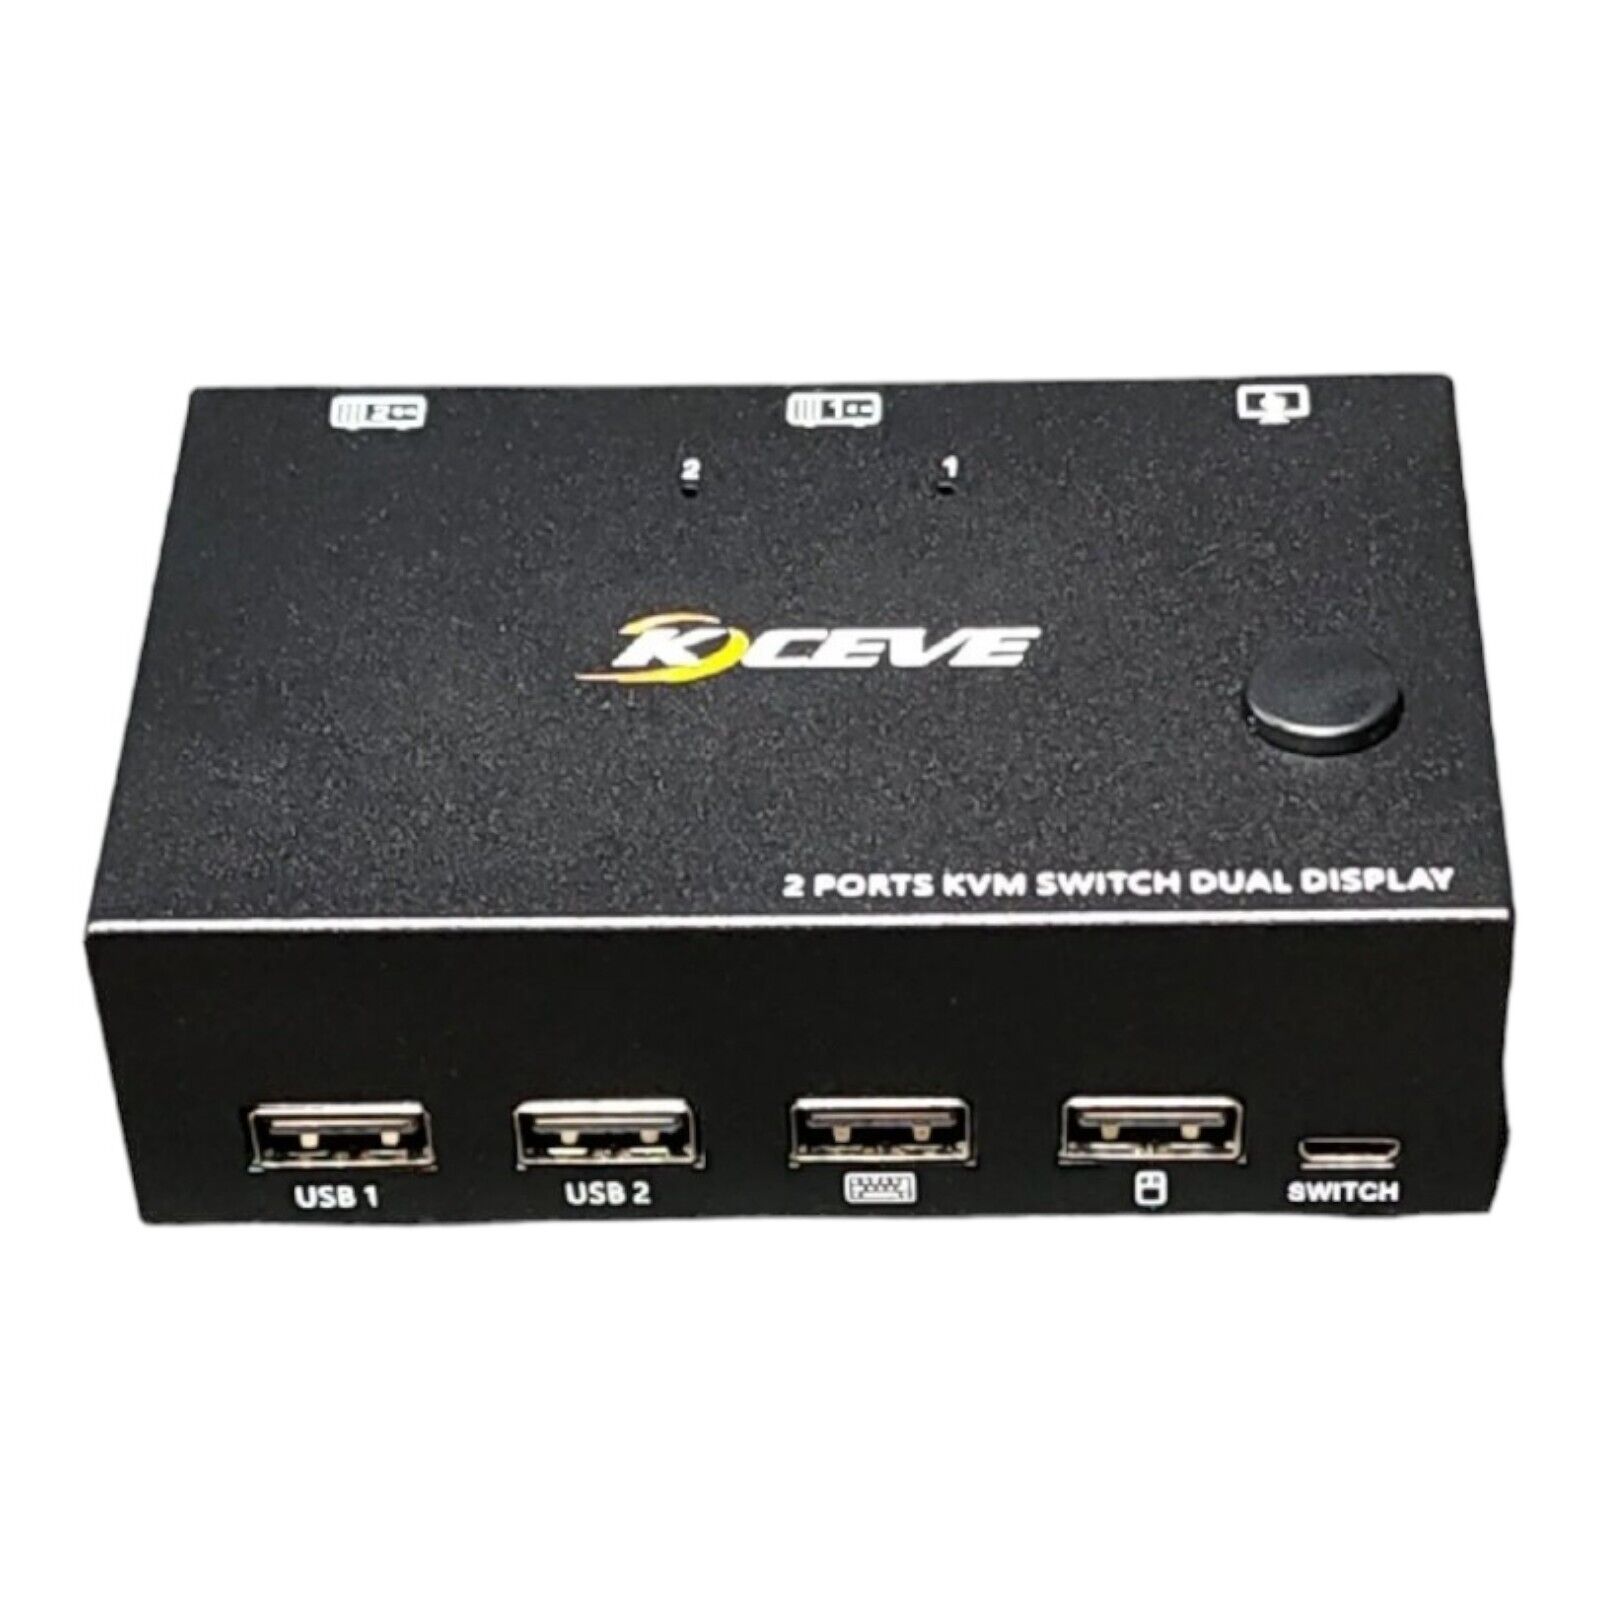  KCEVE DP HDMI USB 3.0 KVM Switch 2 Computer 2 Monitors (Unit only not cables)